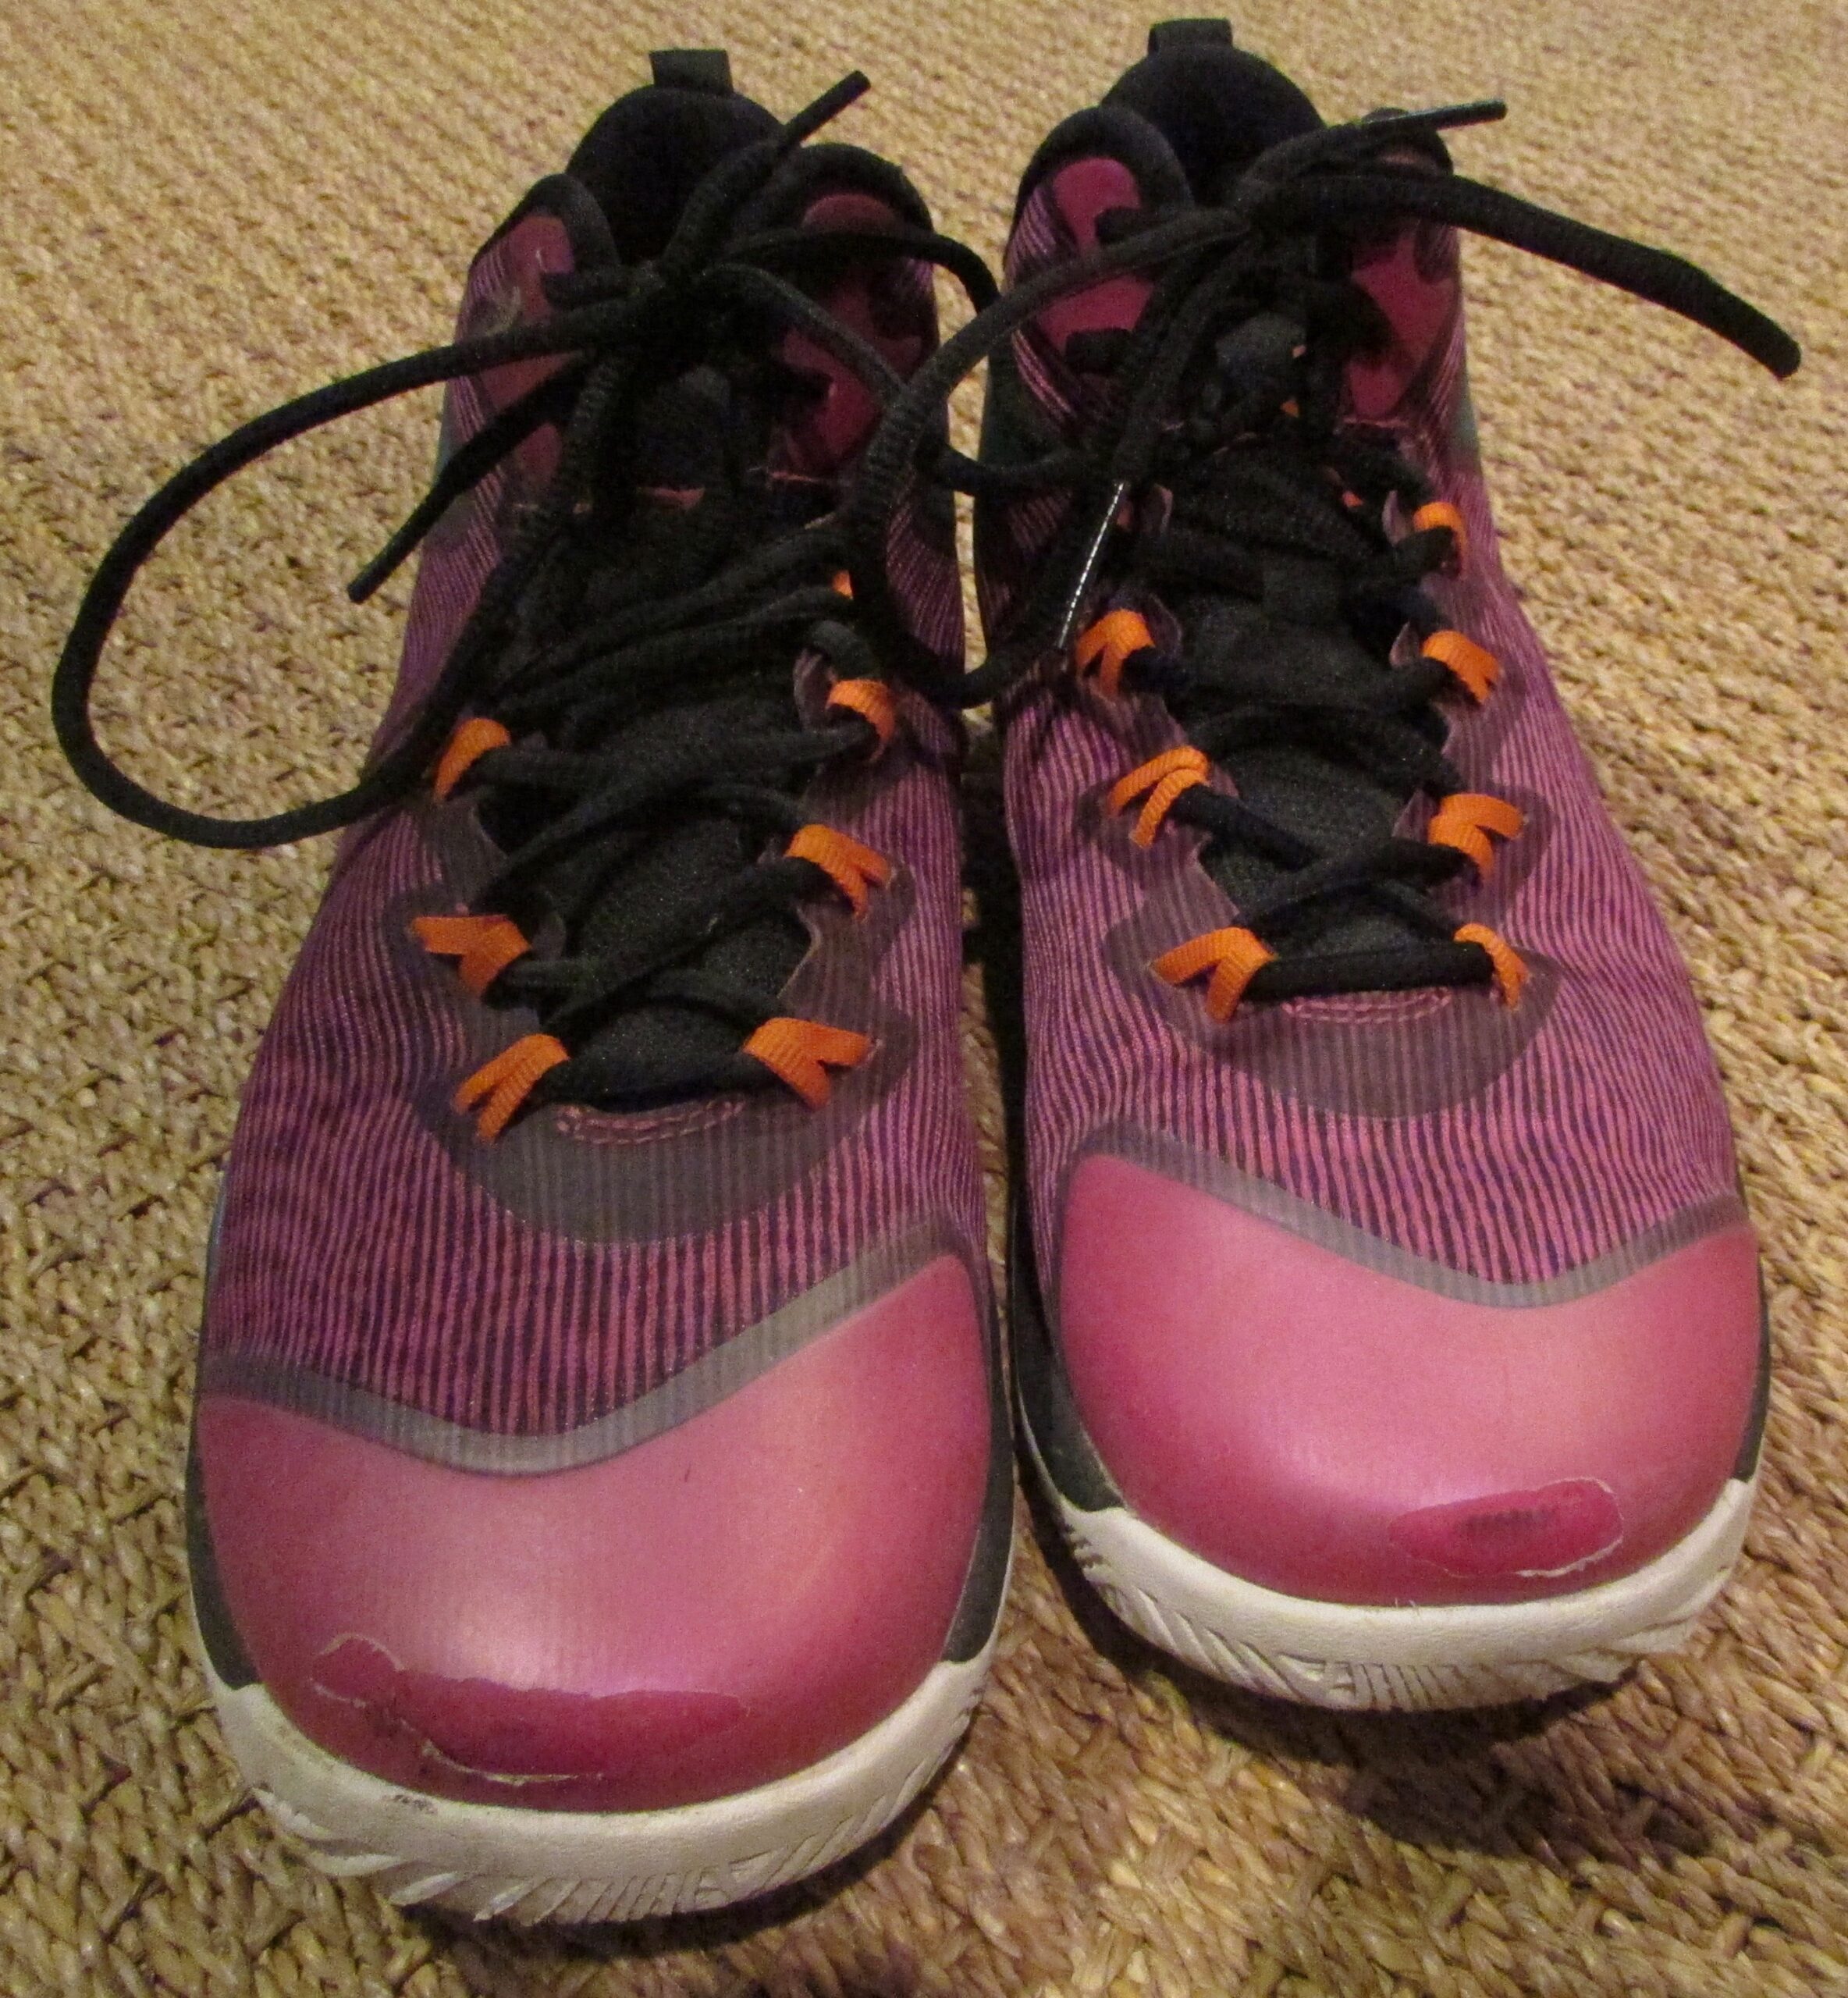 Nike Jordan Superfly 3 BG Fusion Pink/Teal/Black Sz 7Y - Heet On Your Feet